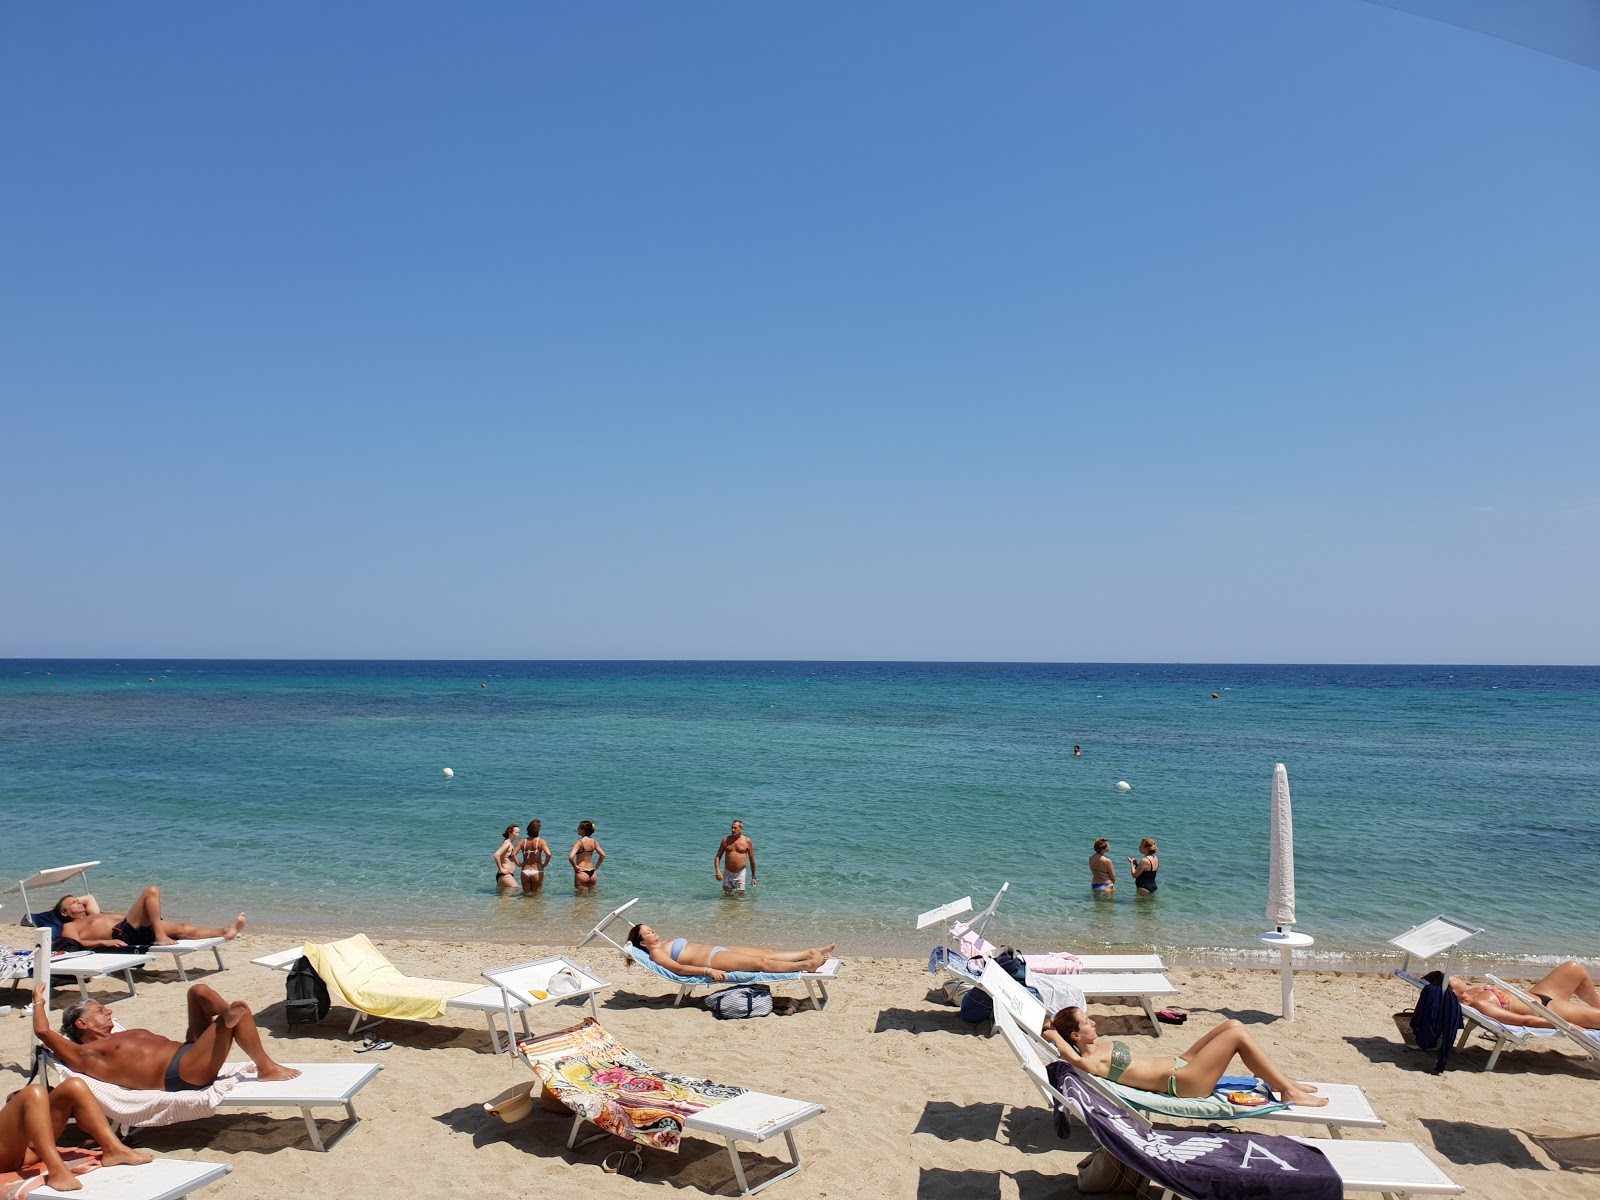 Foto de Spiaggia San Cataldo - lugar popular entre os apreciadores de relaxamento